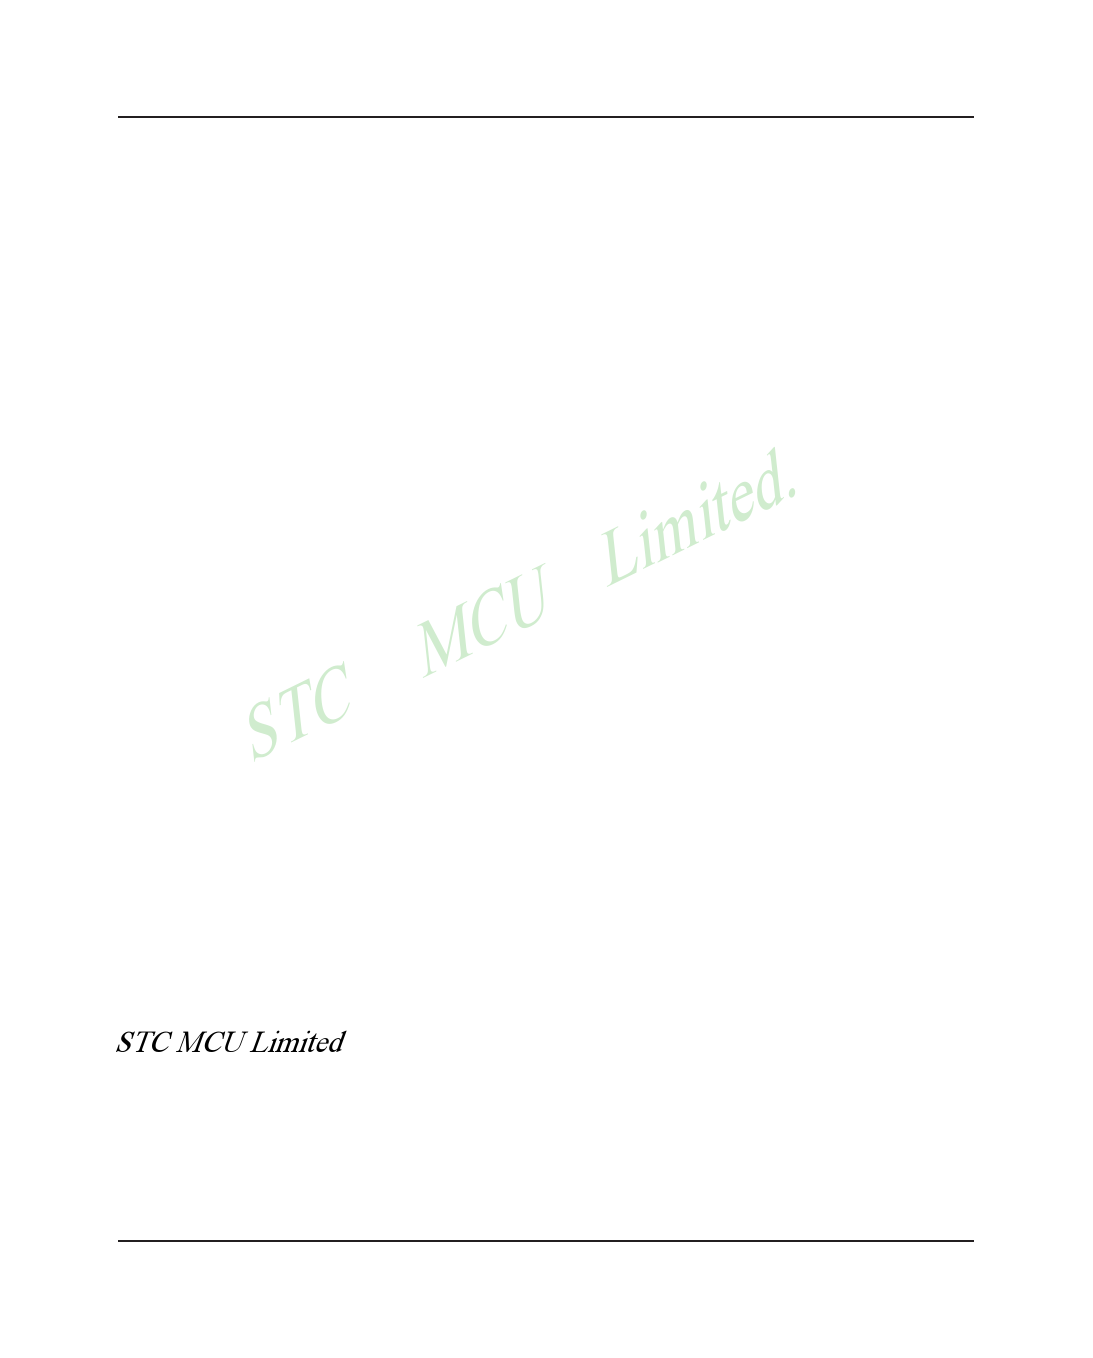 STC12C5A60S2 Hoja de datos, Descripción, Manual